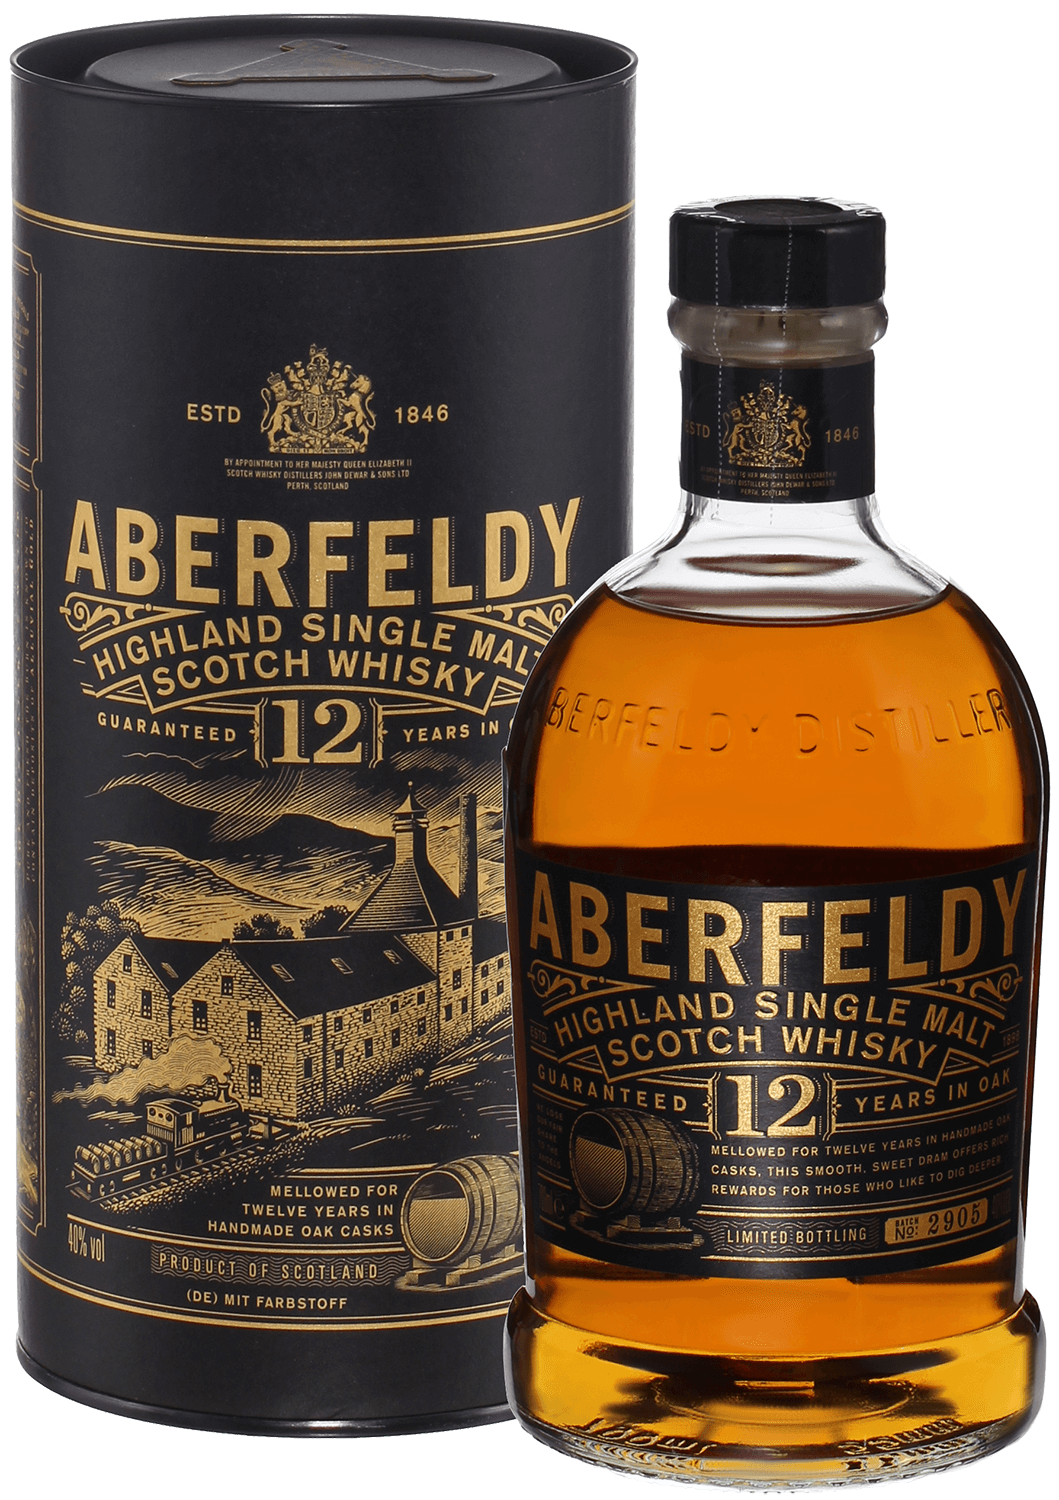 Aberfeldy 12 Years Old Highland Single Malt Scotch Whisky (gift box) glen turner 12 years old single malt scotch whisky gift box